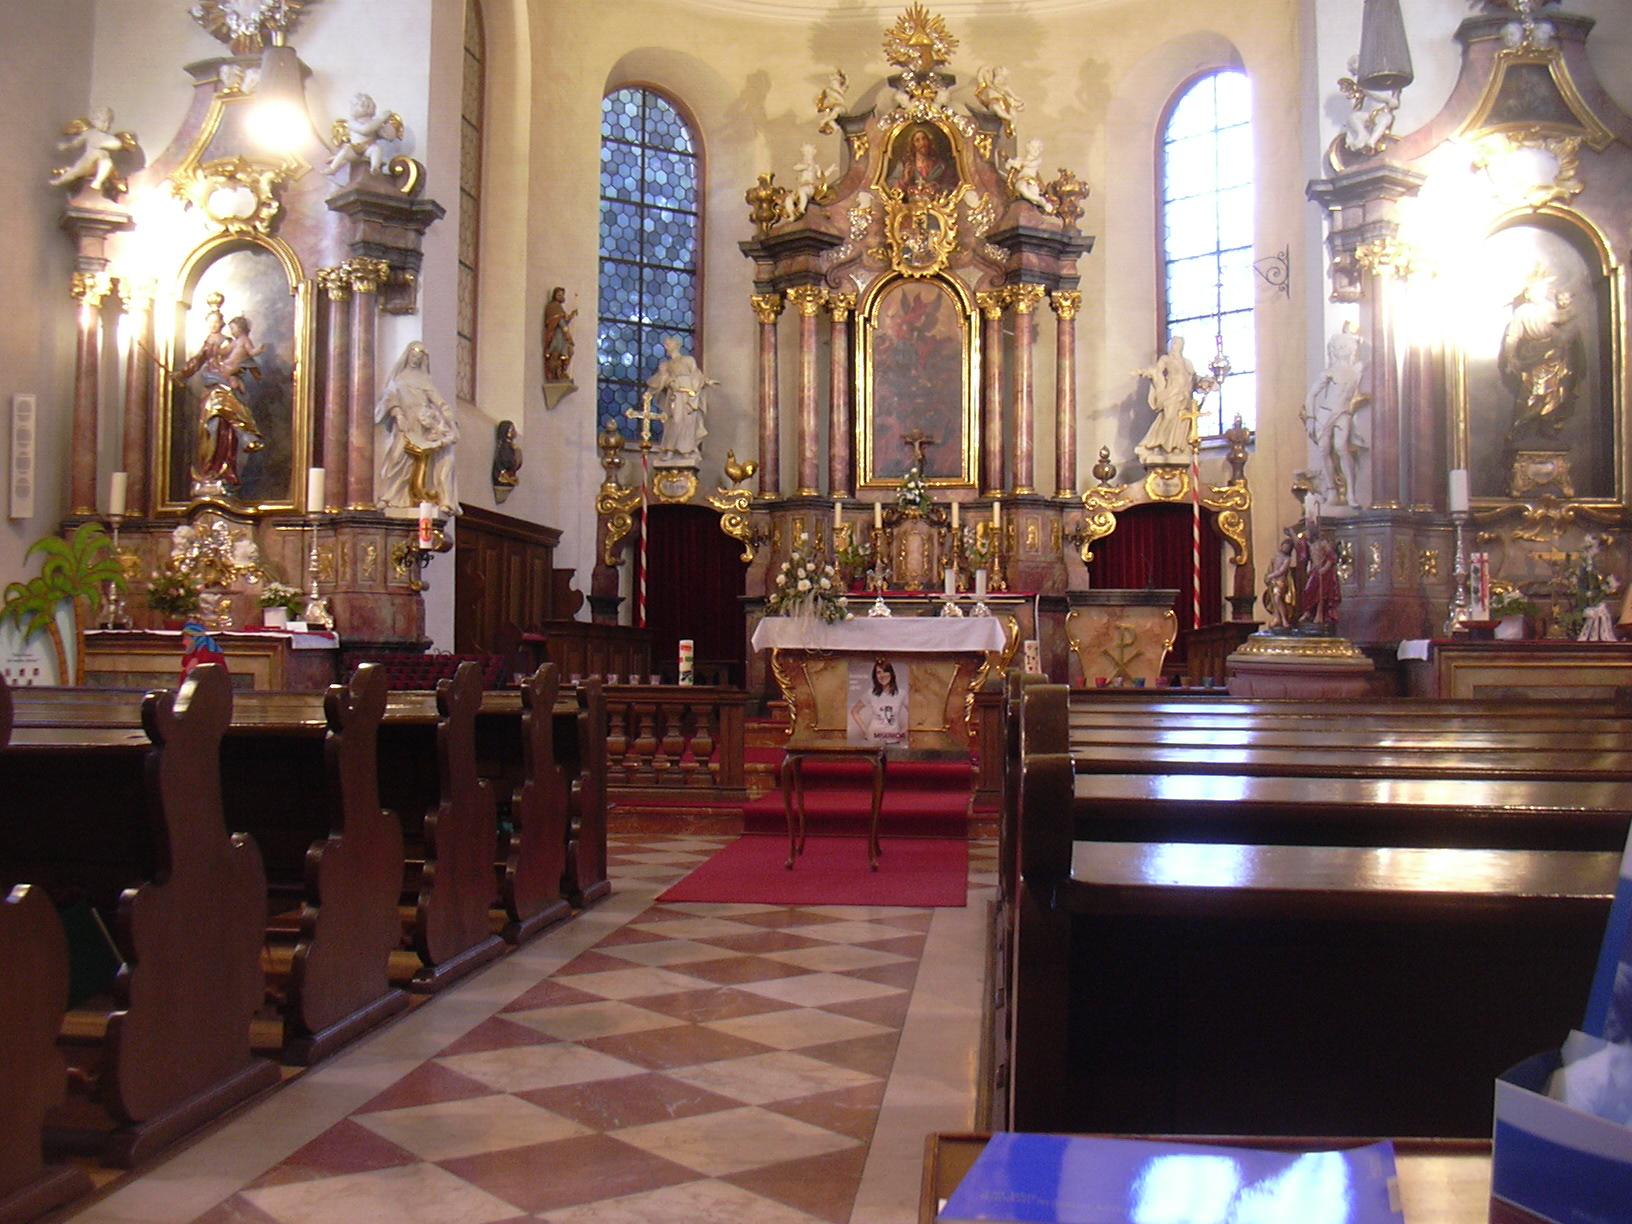 Hofheim Pfarrkirche Innenraum (c) Von Gabriele Delhey - photo taken by Gabriele Delhey, CC BY-SA 3.0, https://commons.wikimedia.org/w/index.php?curid=1783171